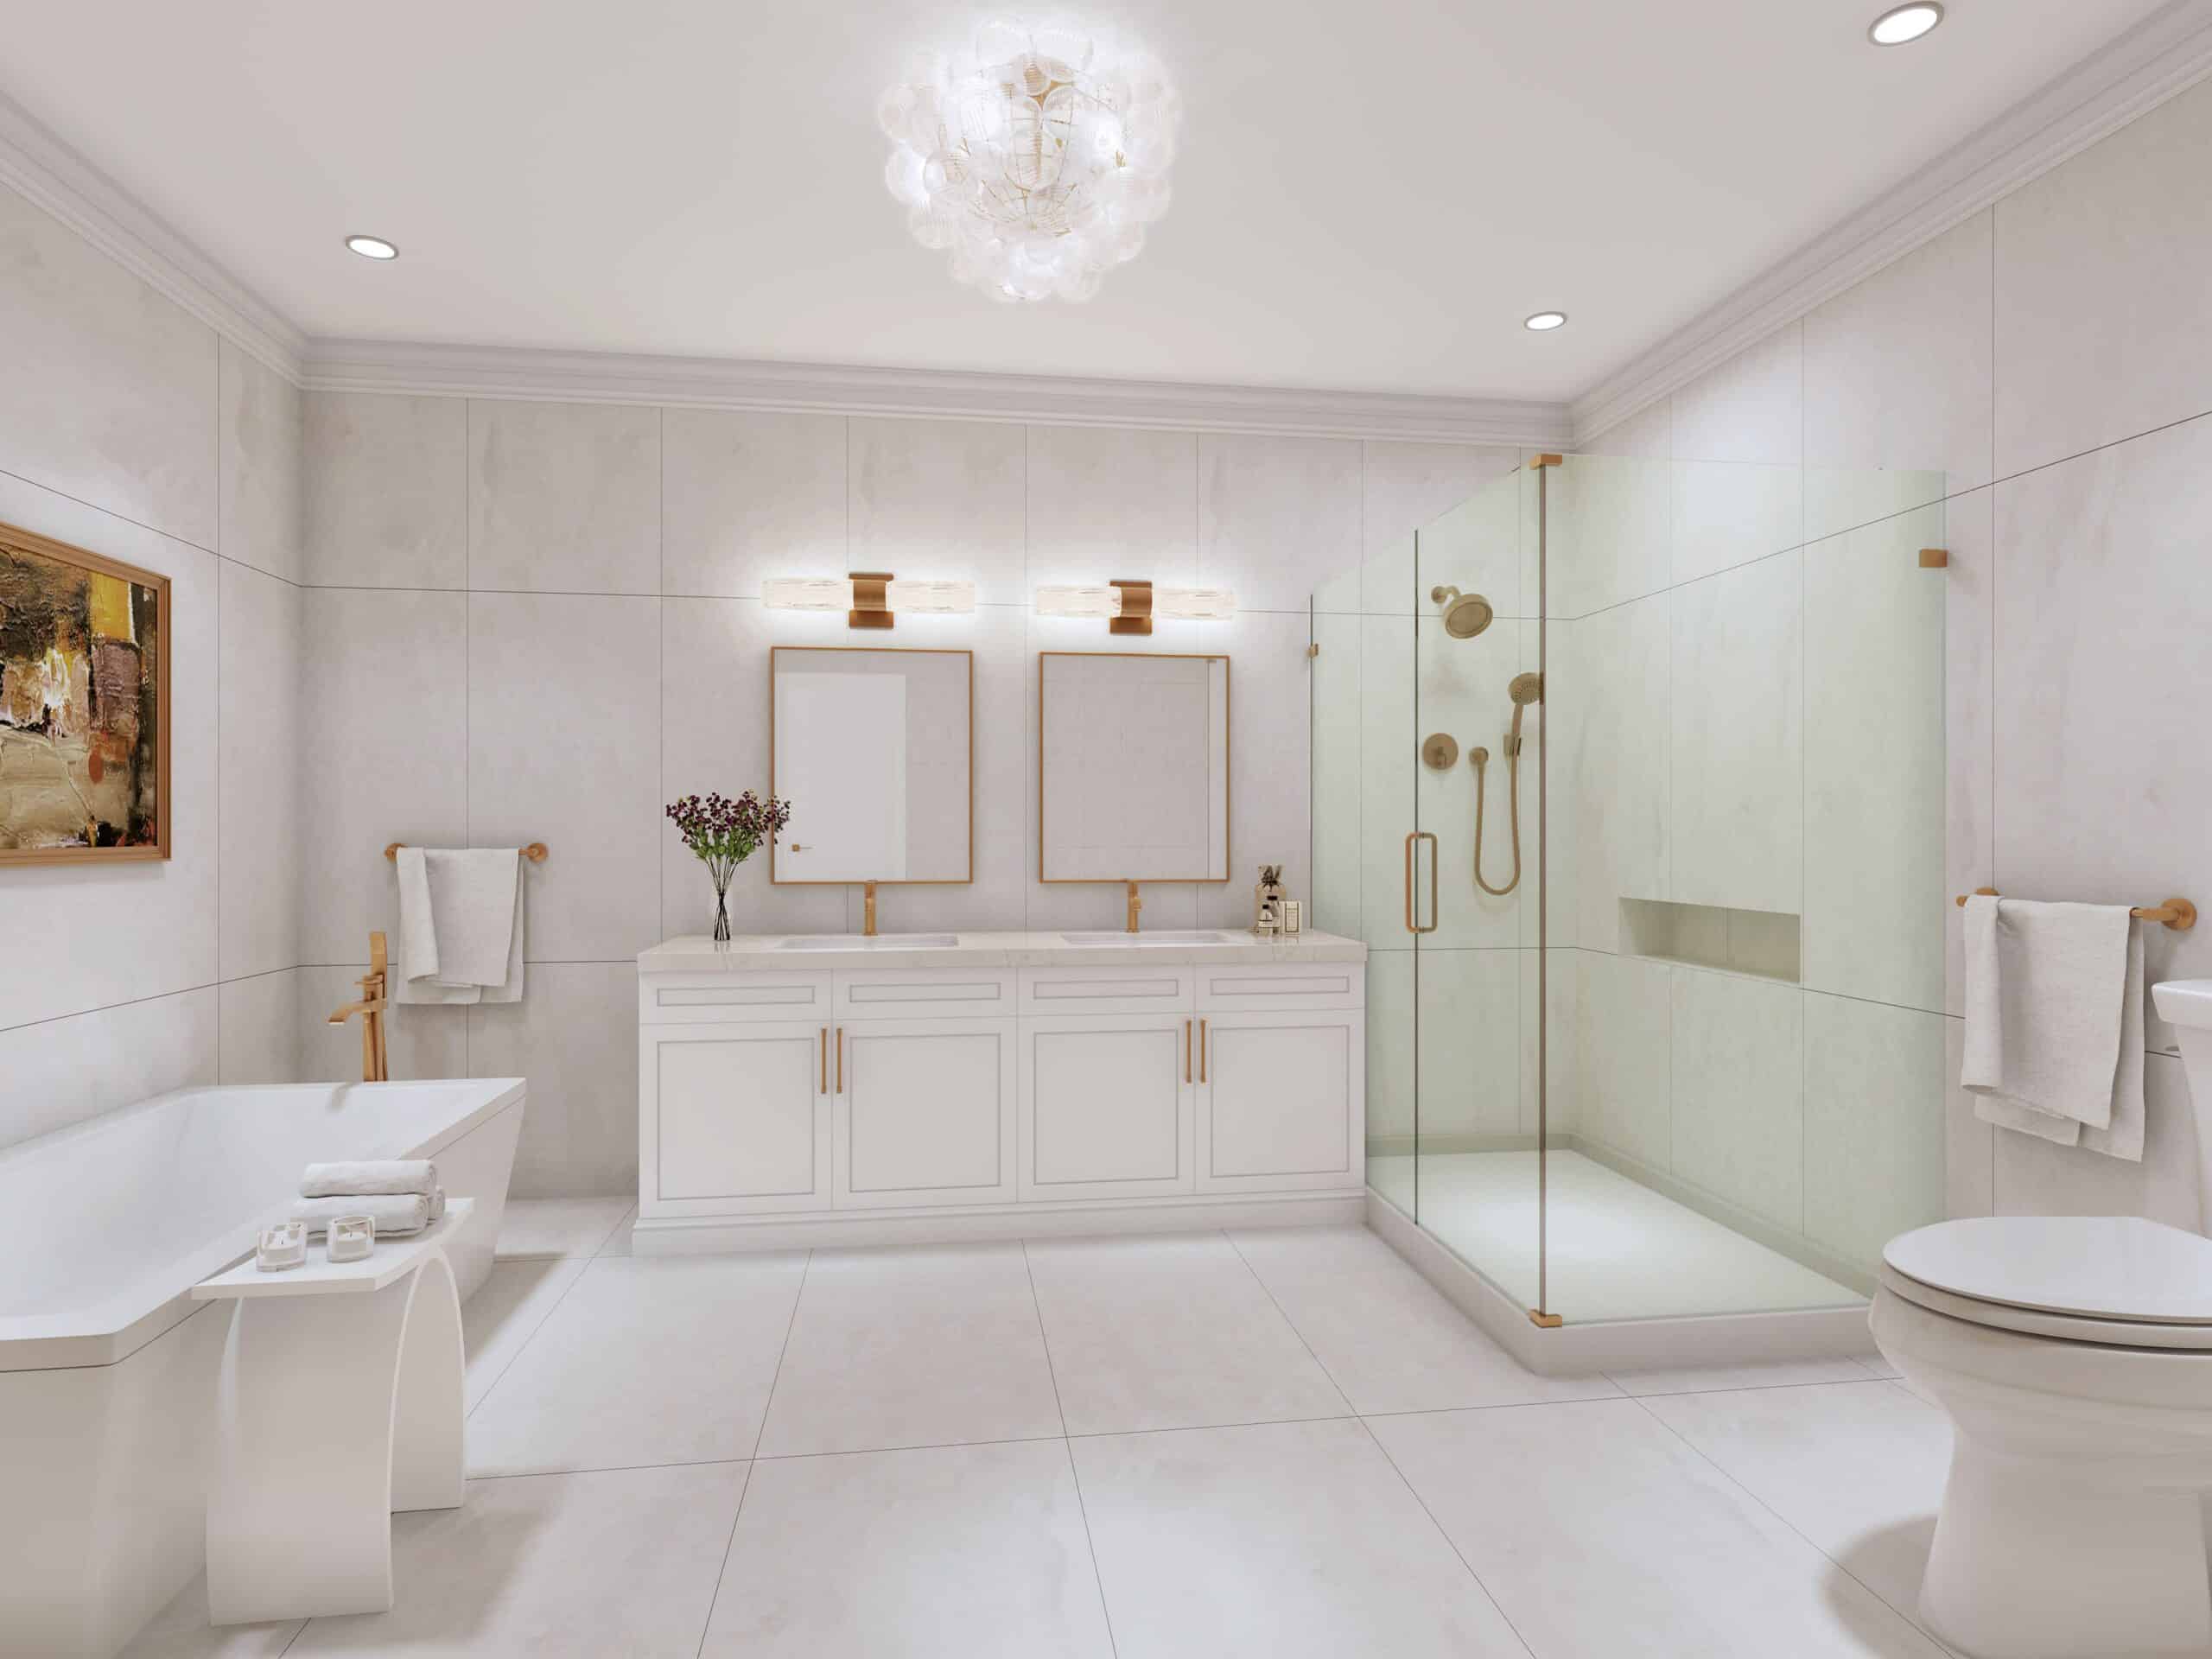 Adelphi Residences - Render Image, Master Bathroom - View 2